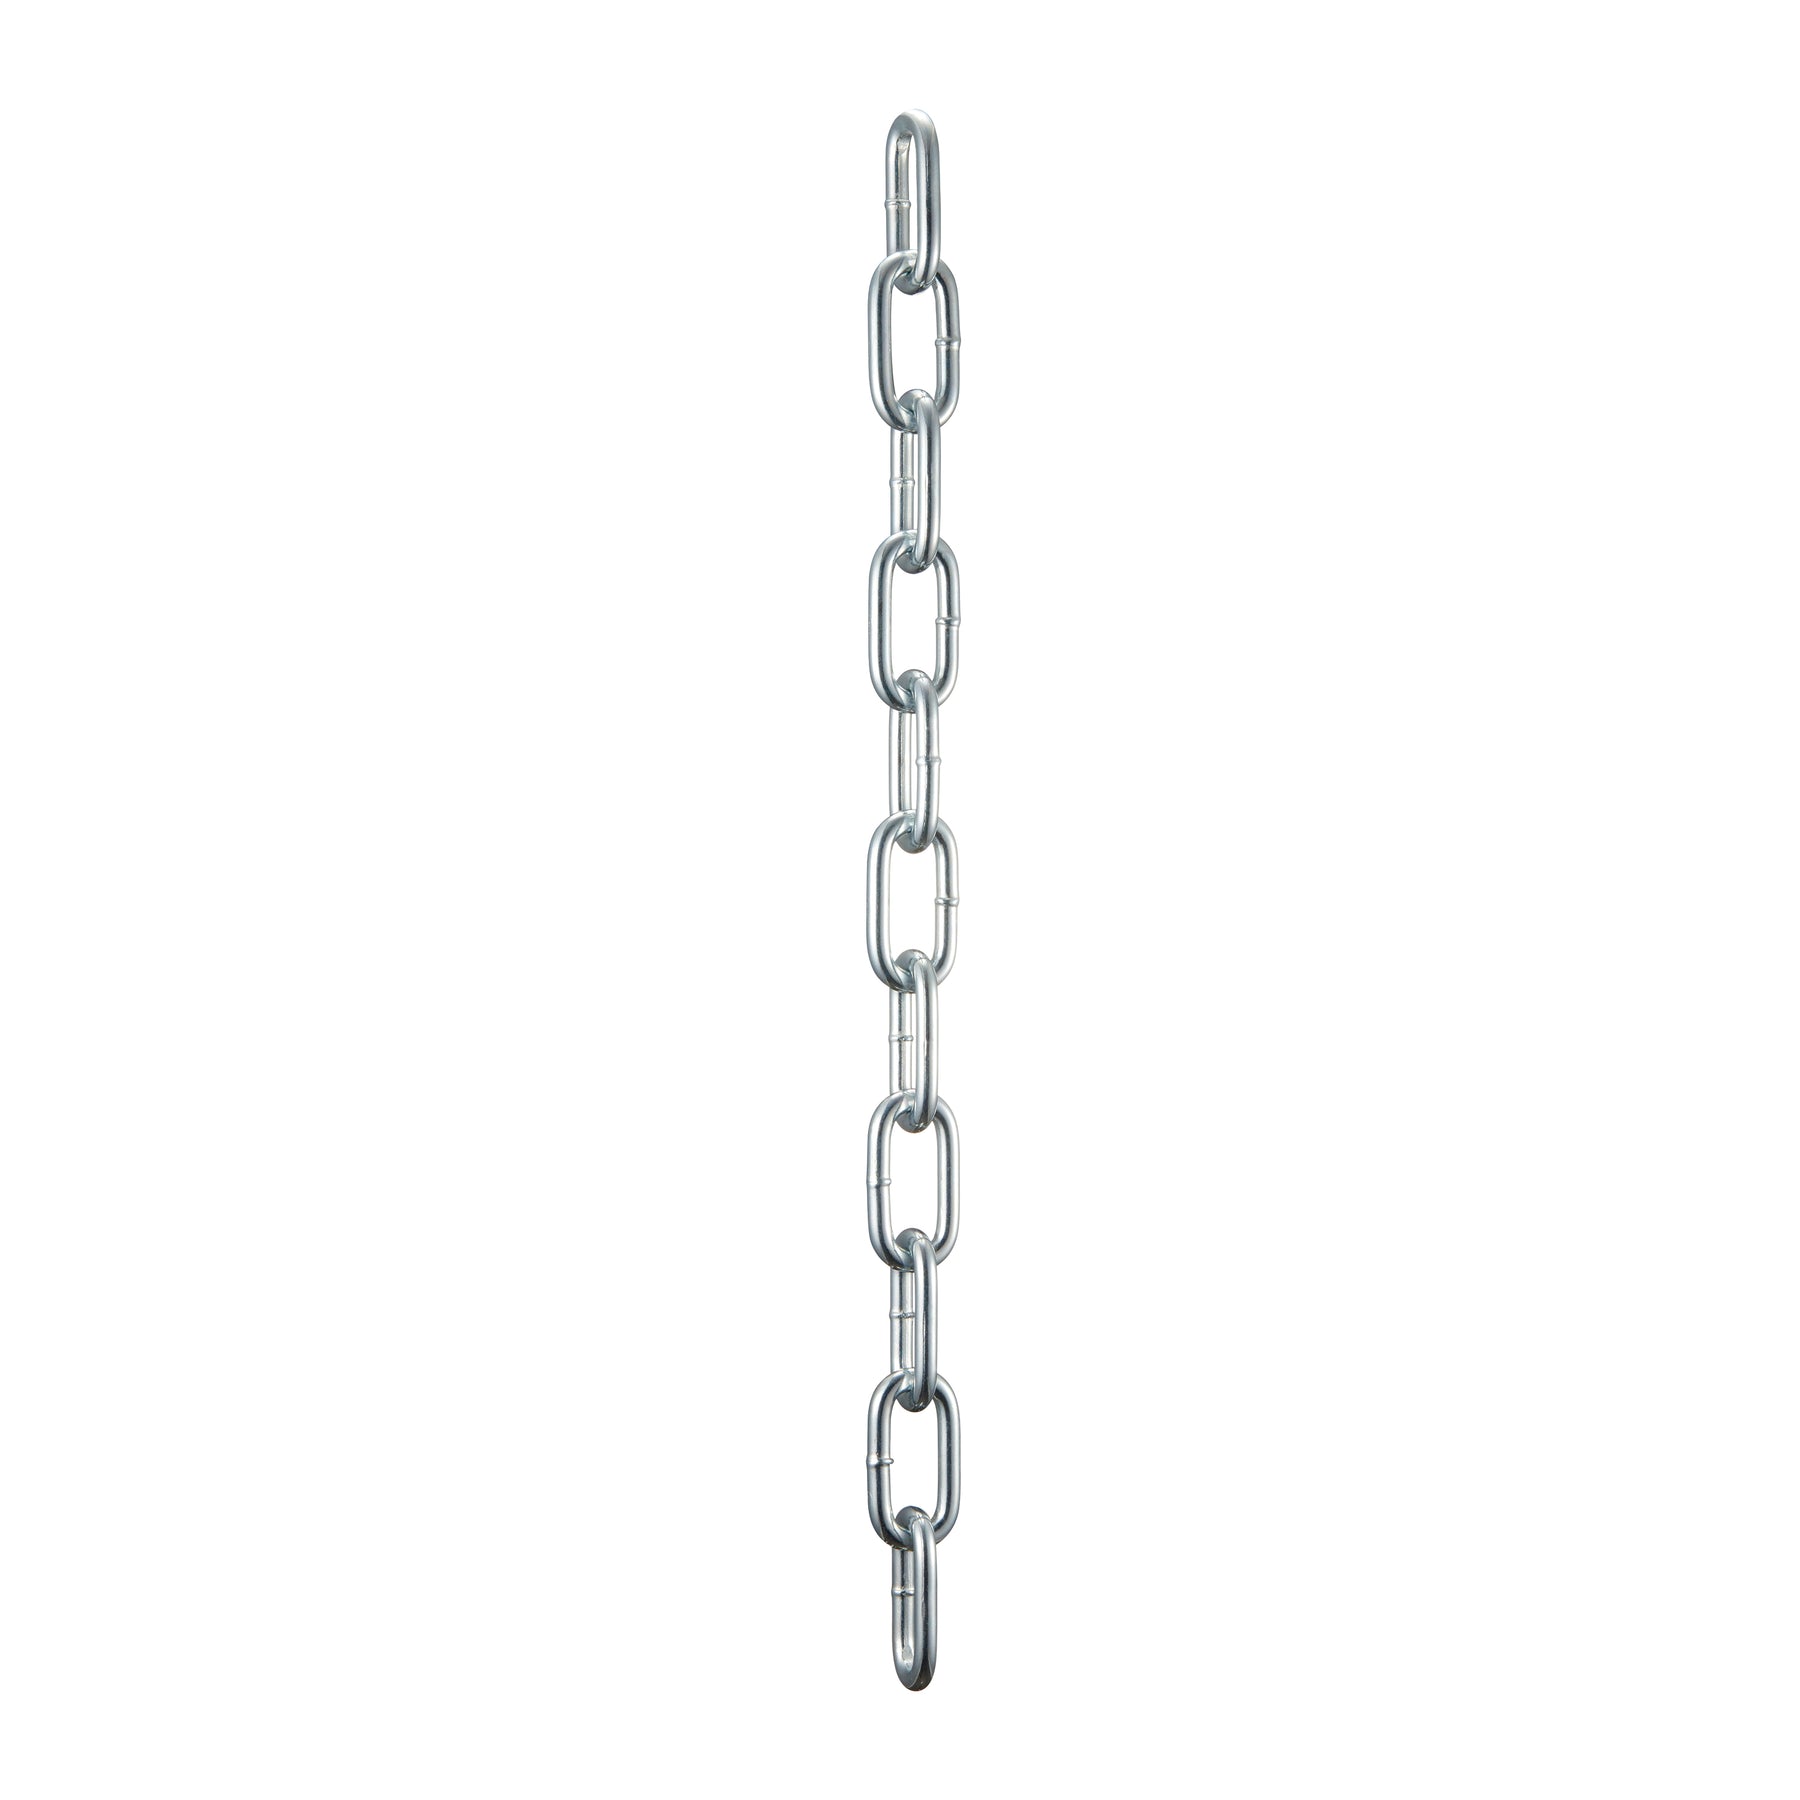 12-inch metal chain.